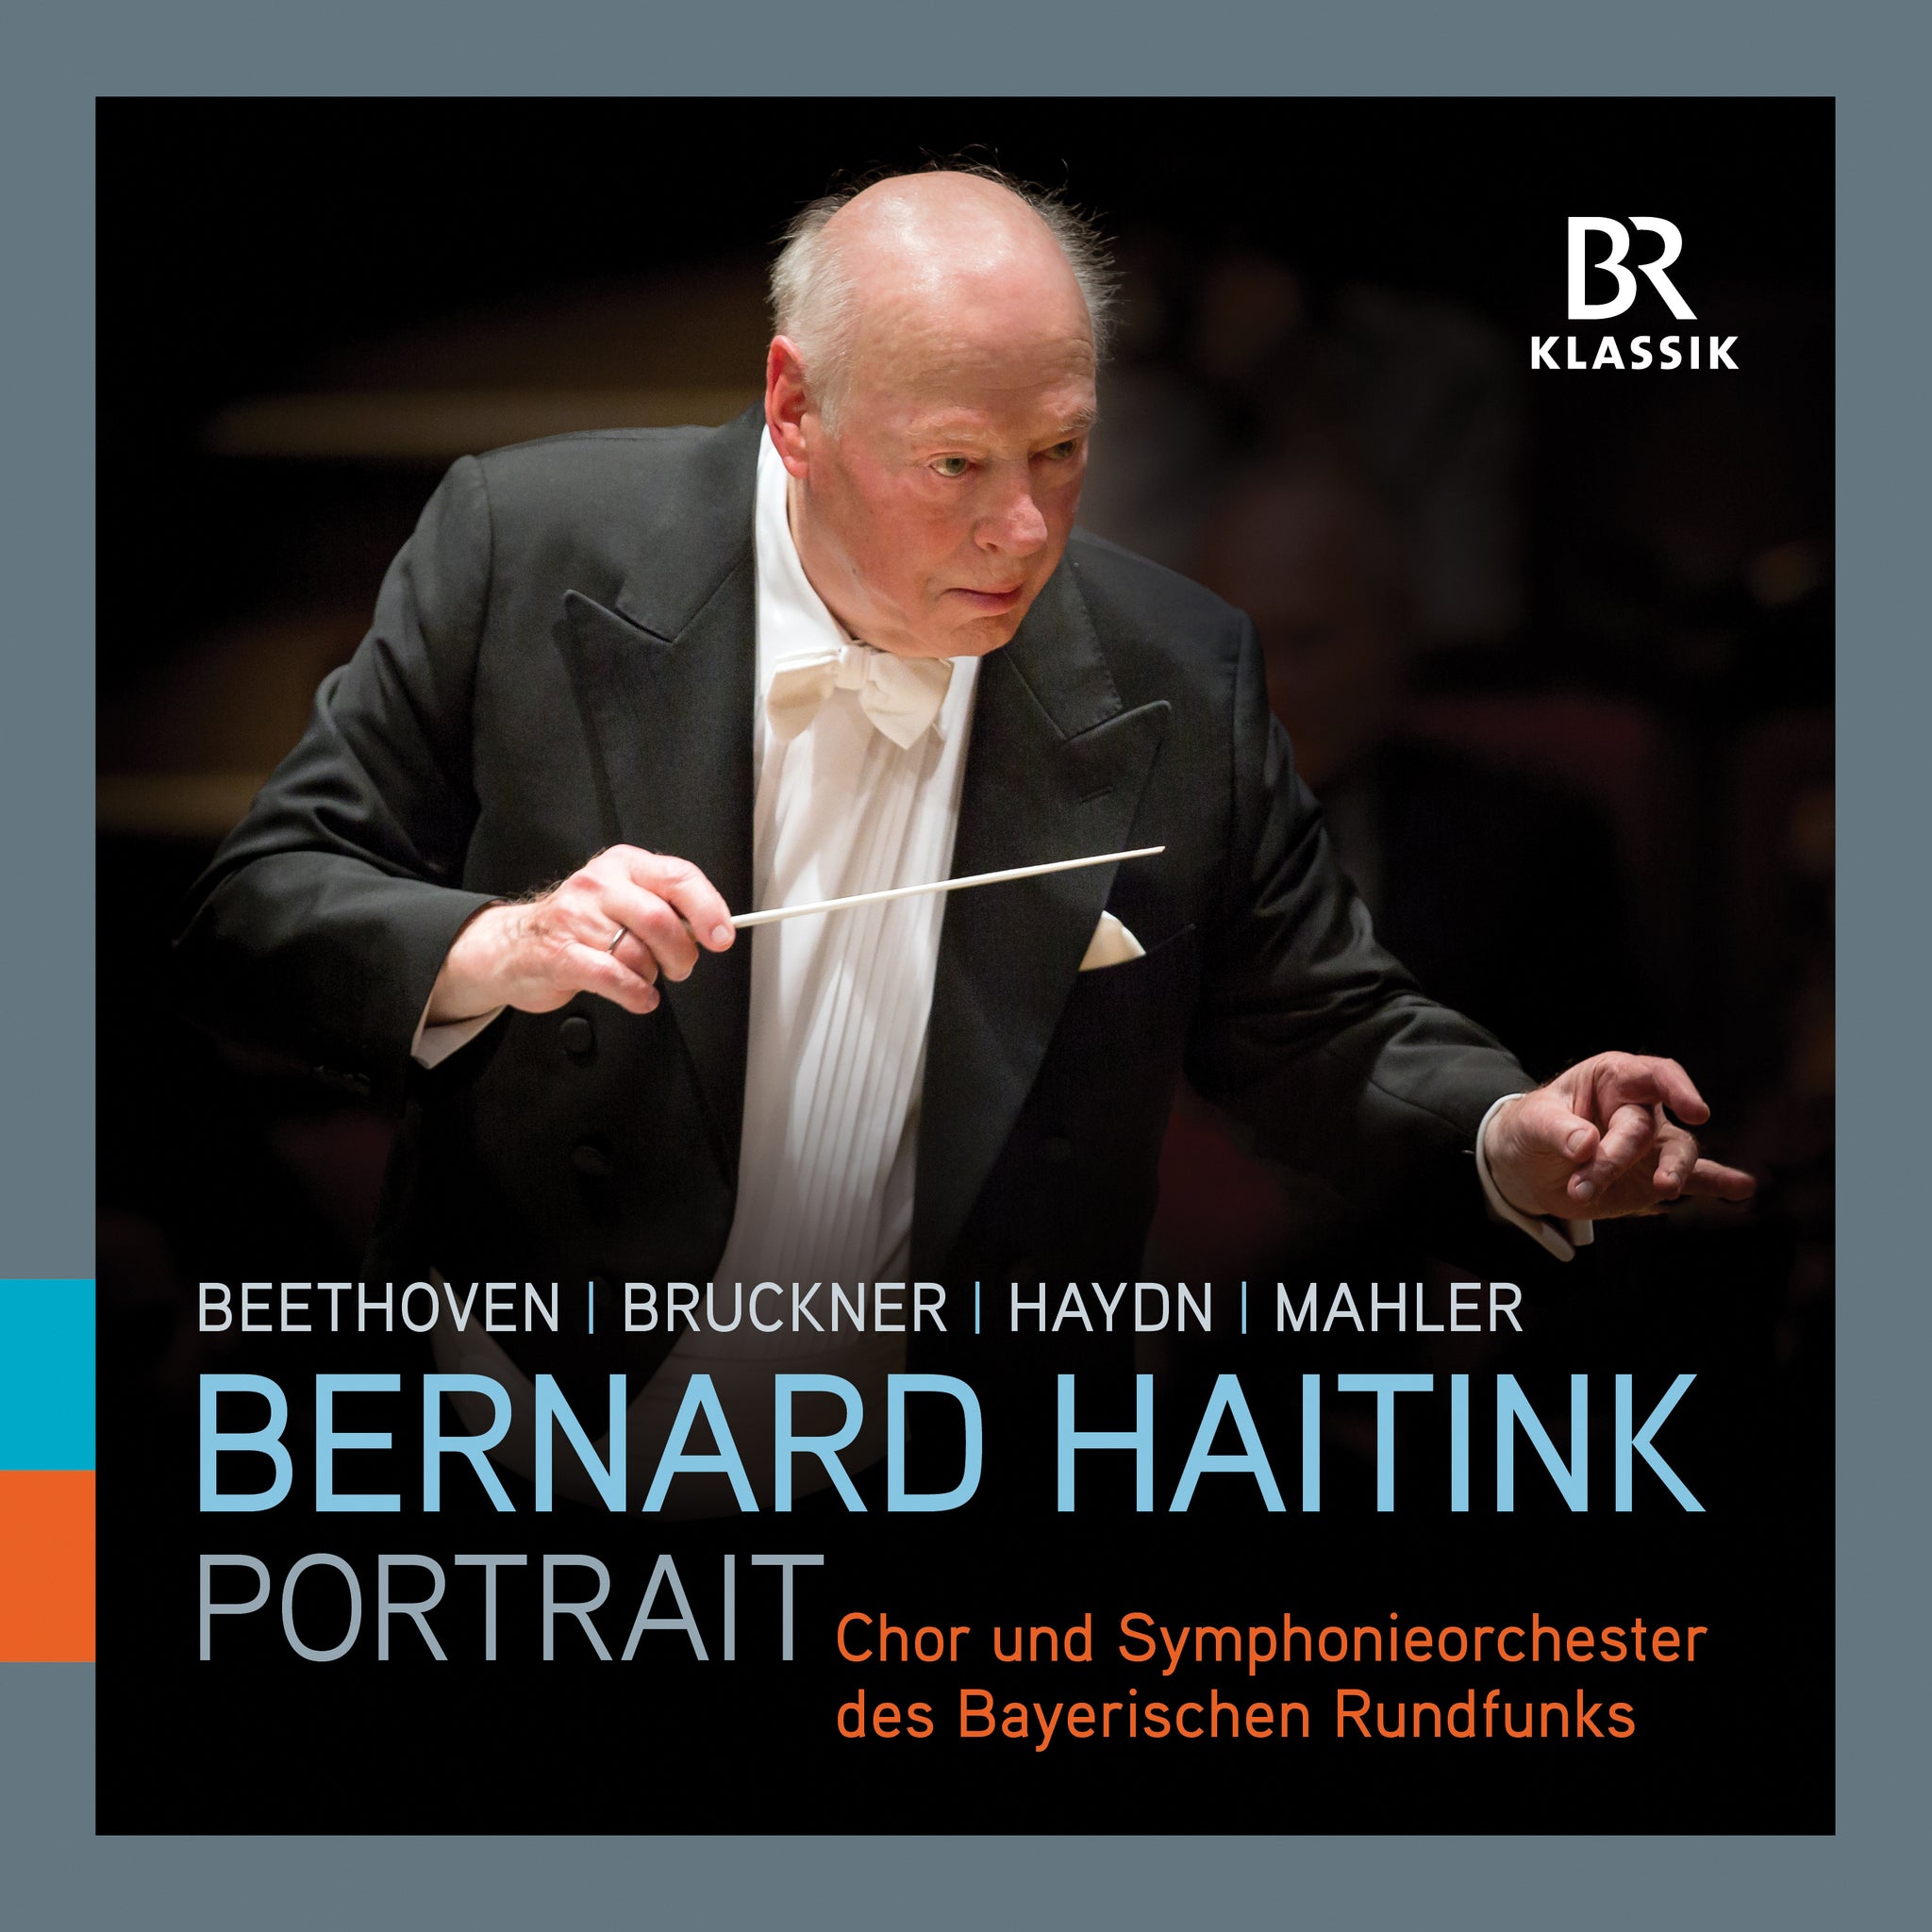 Bernard Haitink: Portrait / Bavarian Radio Symphony Orchestra